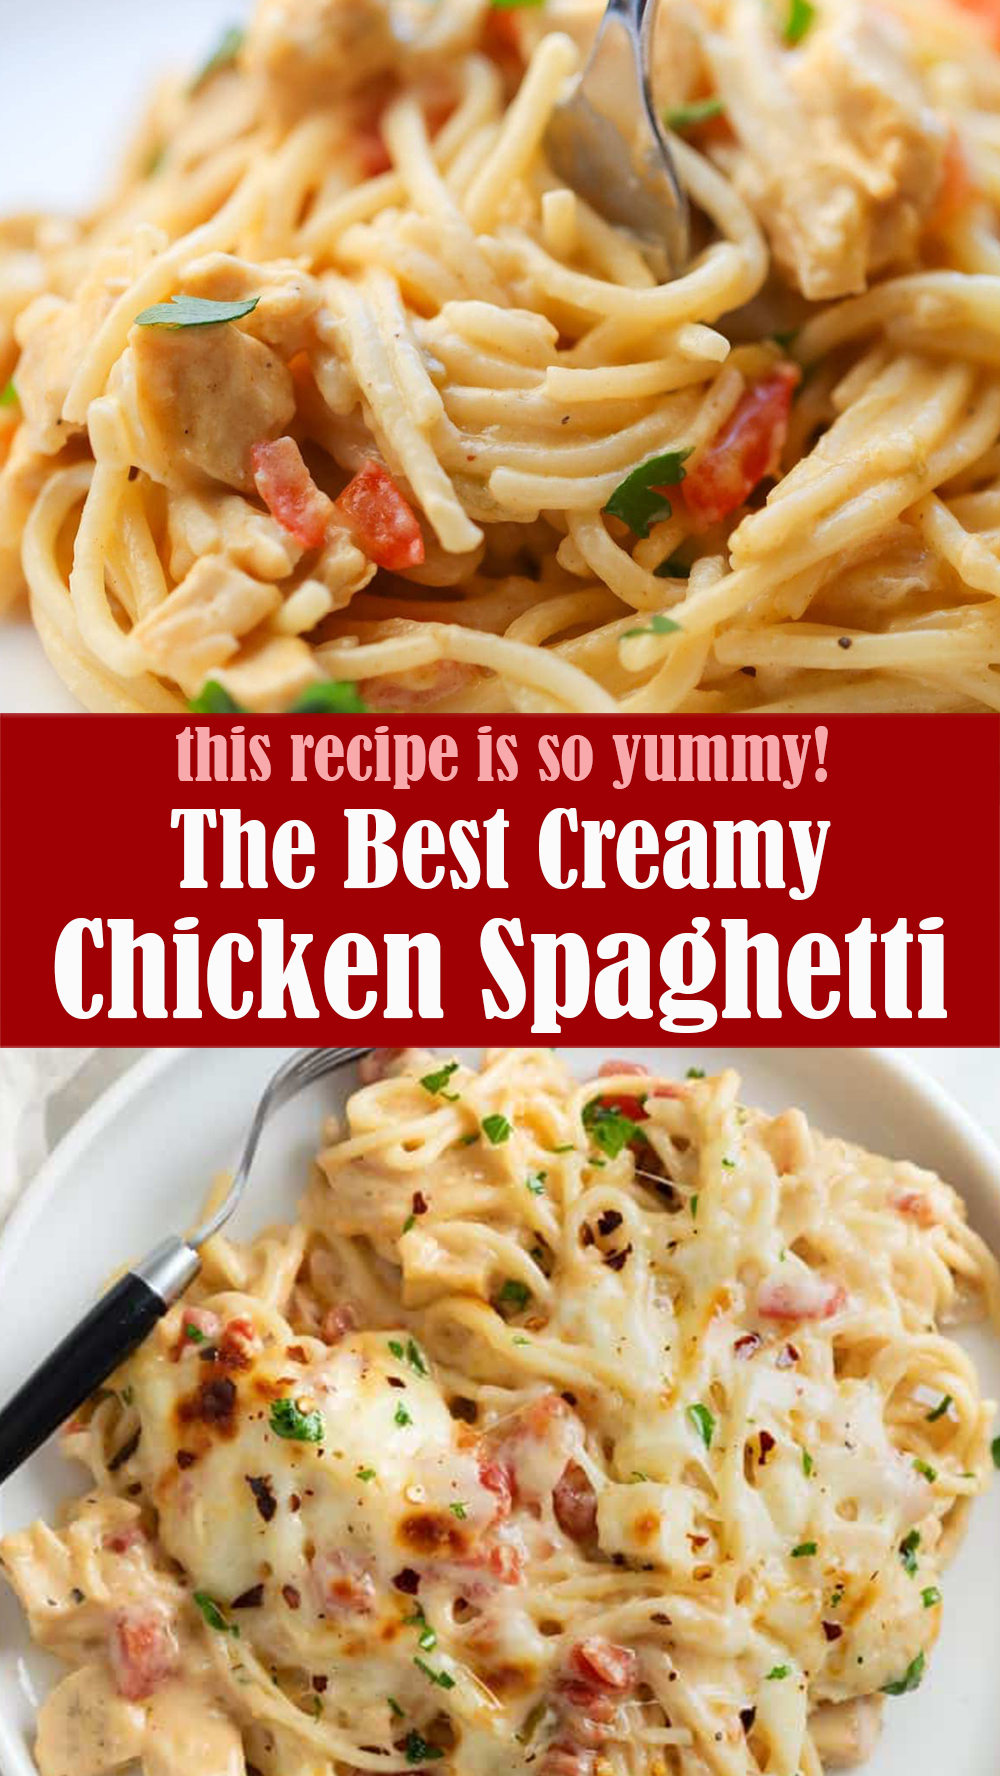 The Best Creamy Chicken Spaghetti